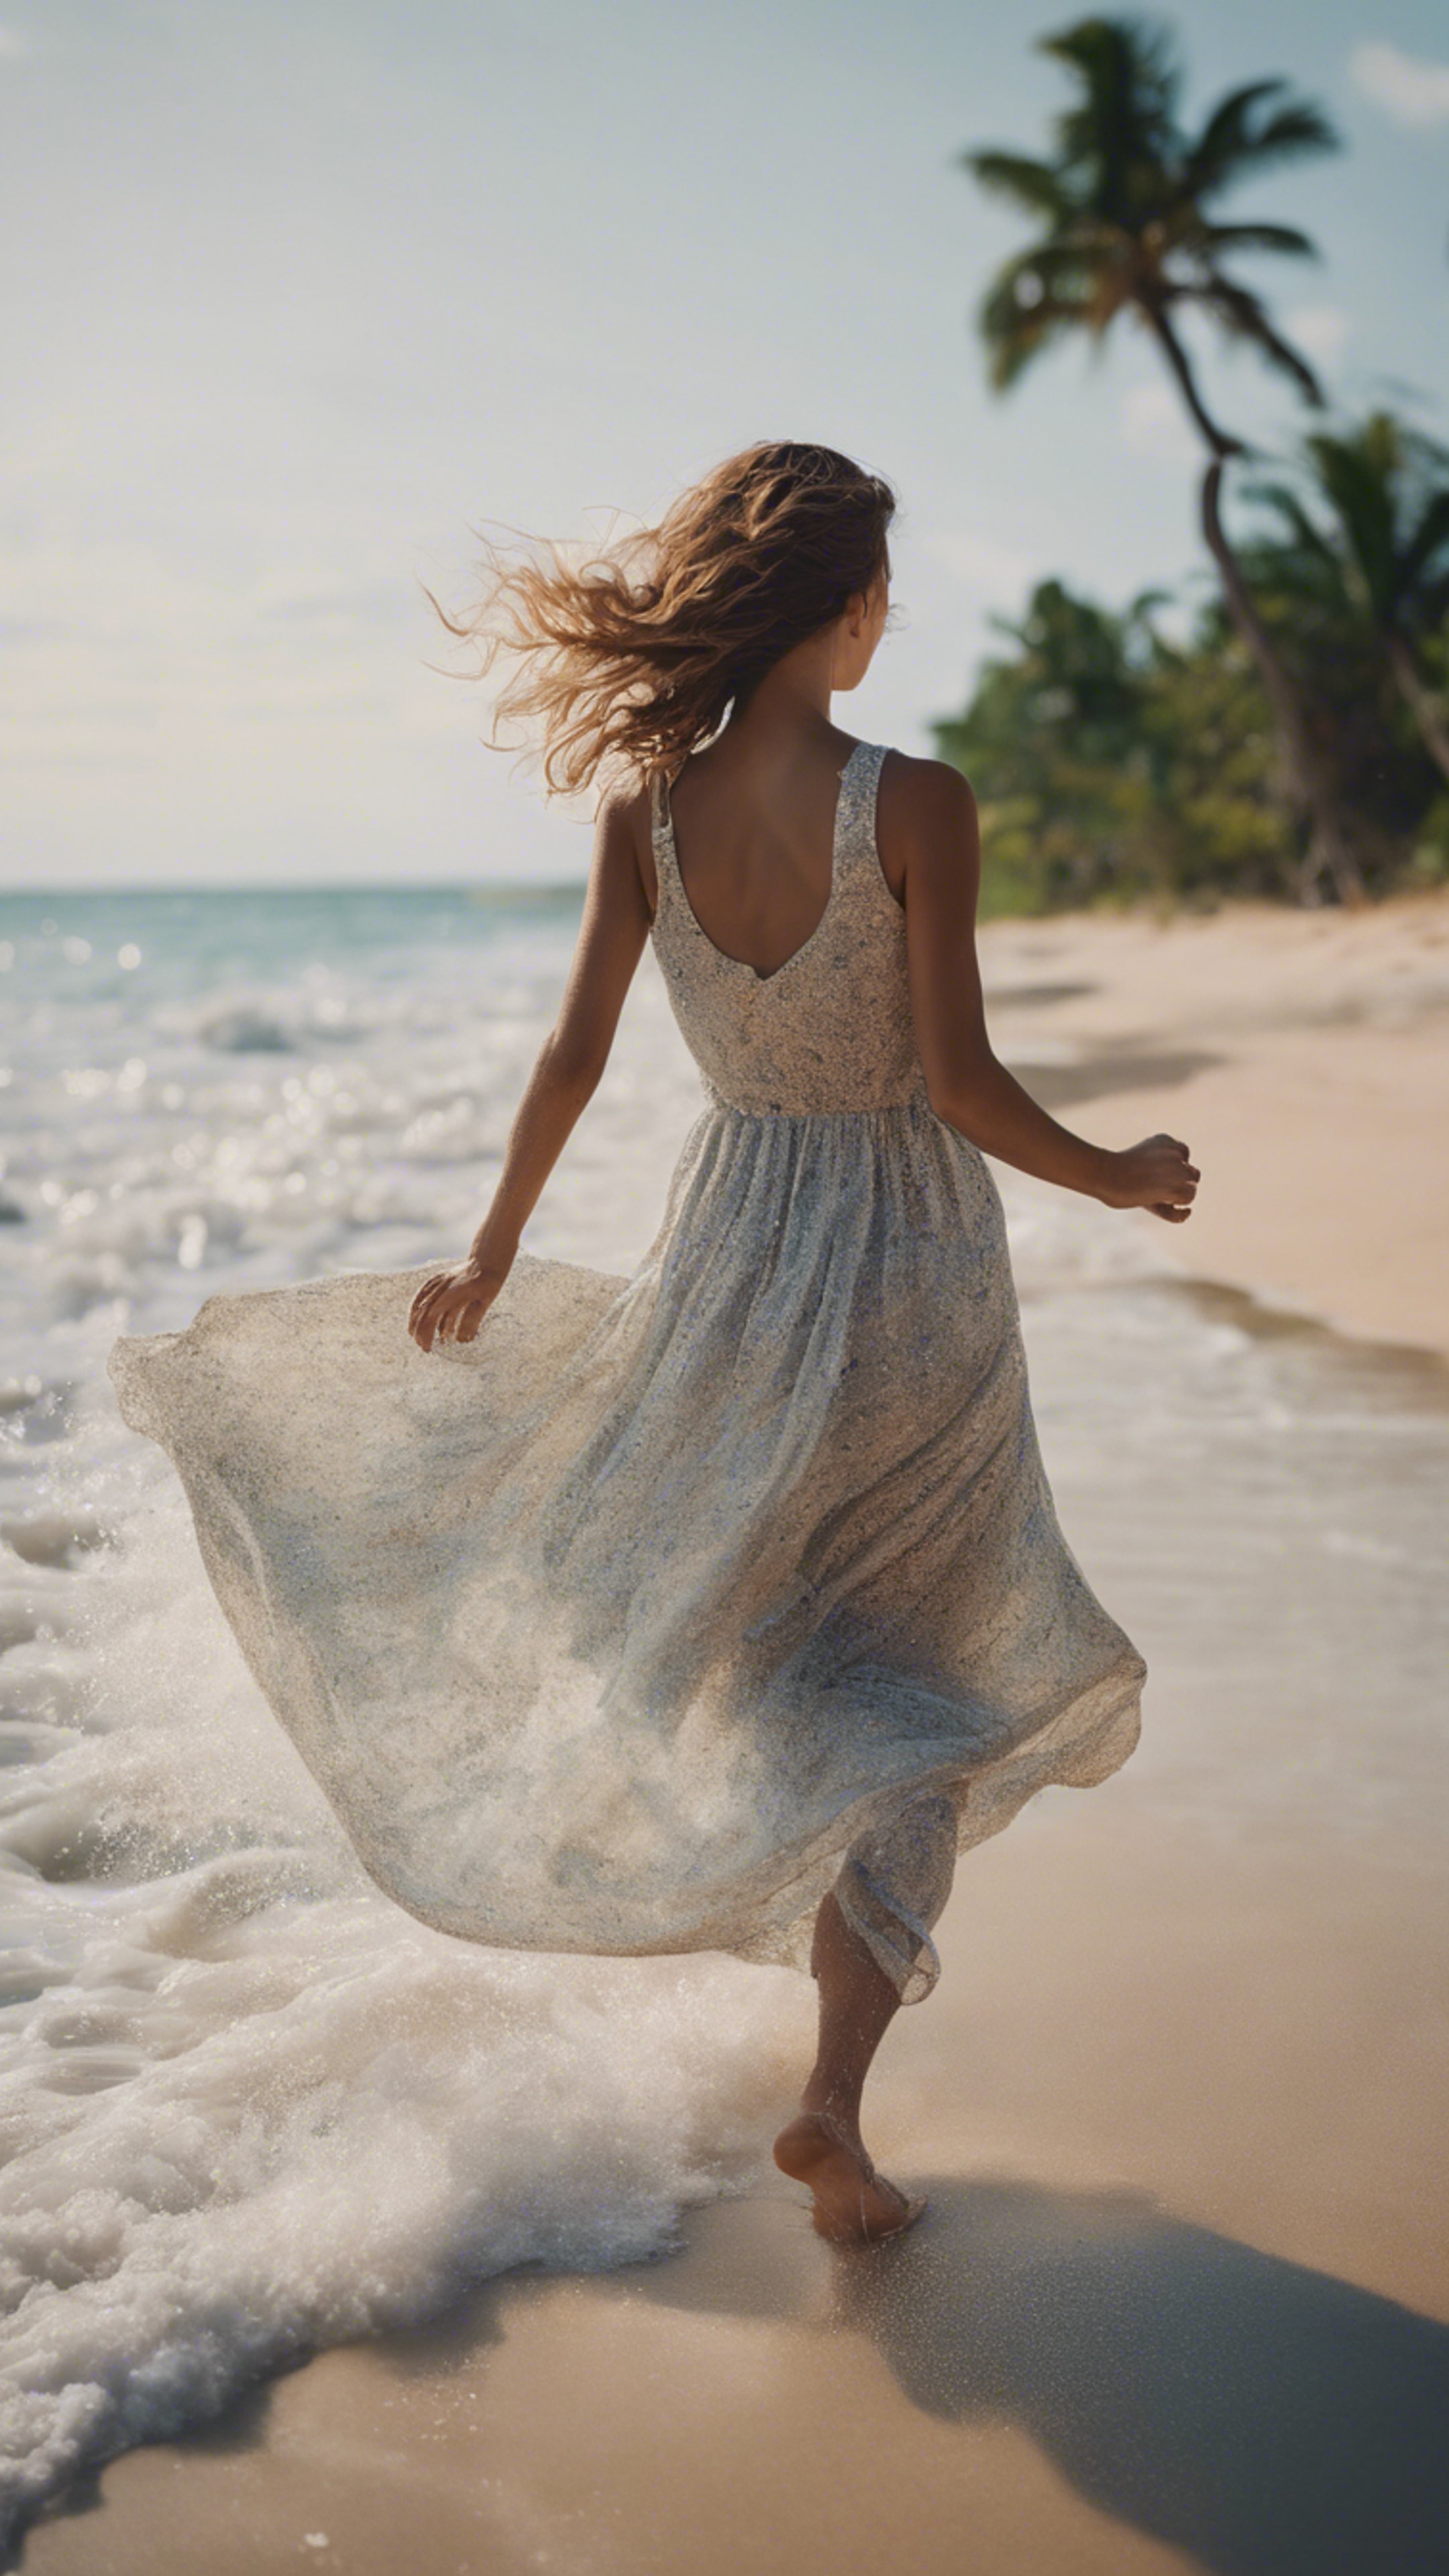 A girl in a flowy dress running alongside the sea at a tropical beach.壁紙[6de970100921406193d7]